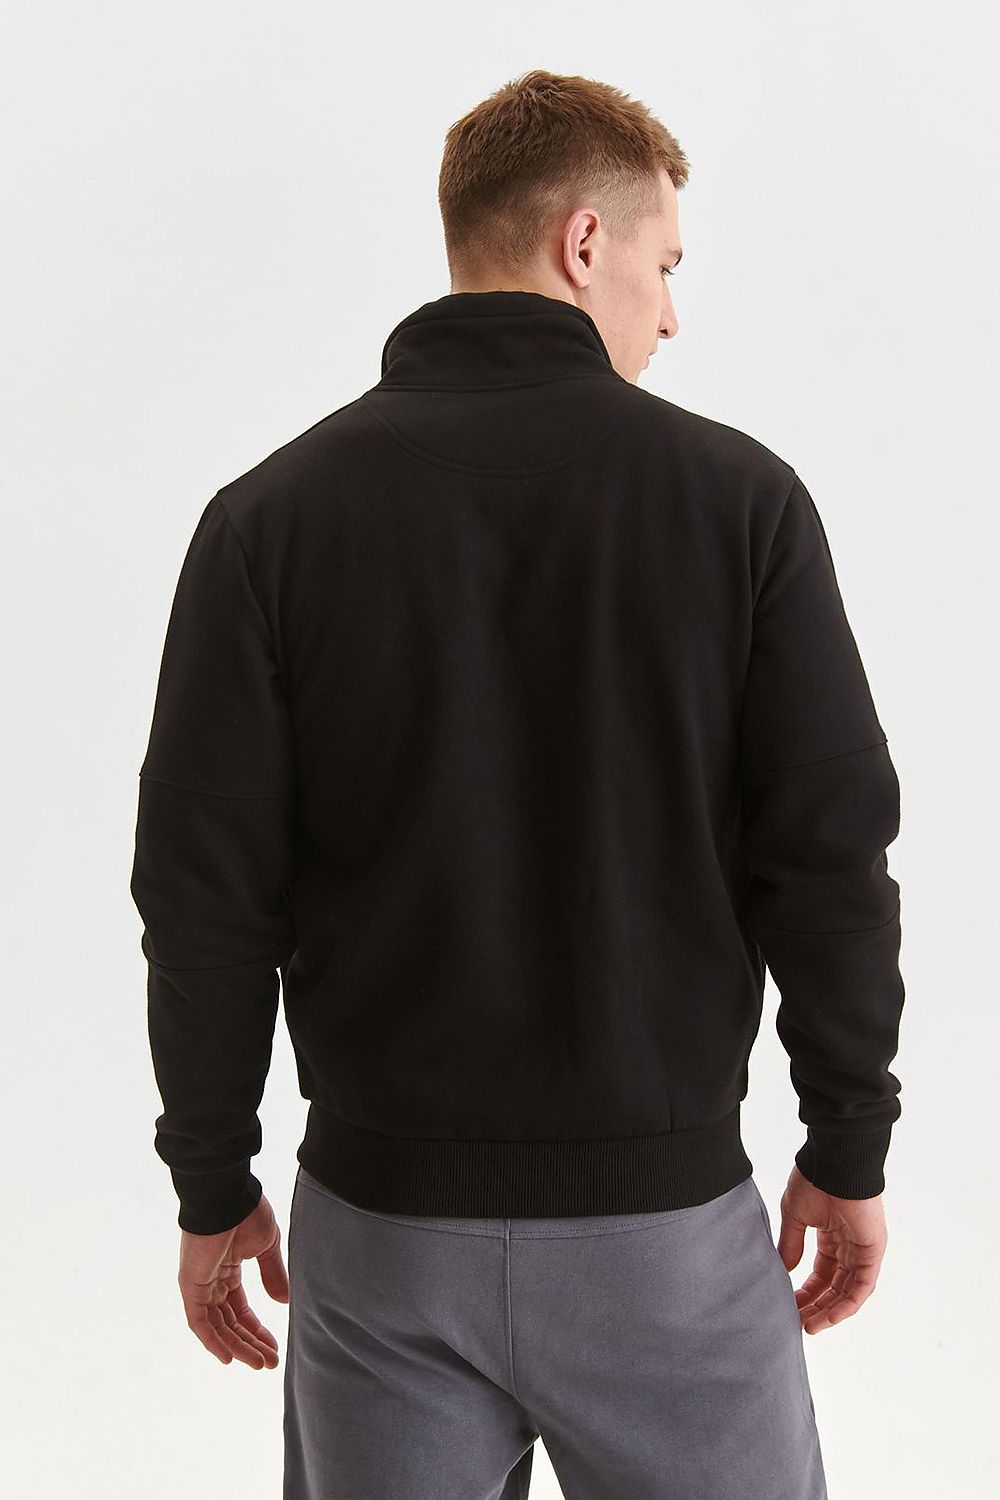 Sweatshirt model 174317 Top Secret Men`s Sweatshirts Wholesale Clothing ...